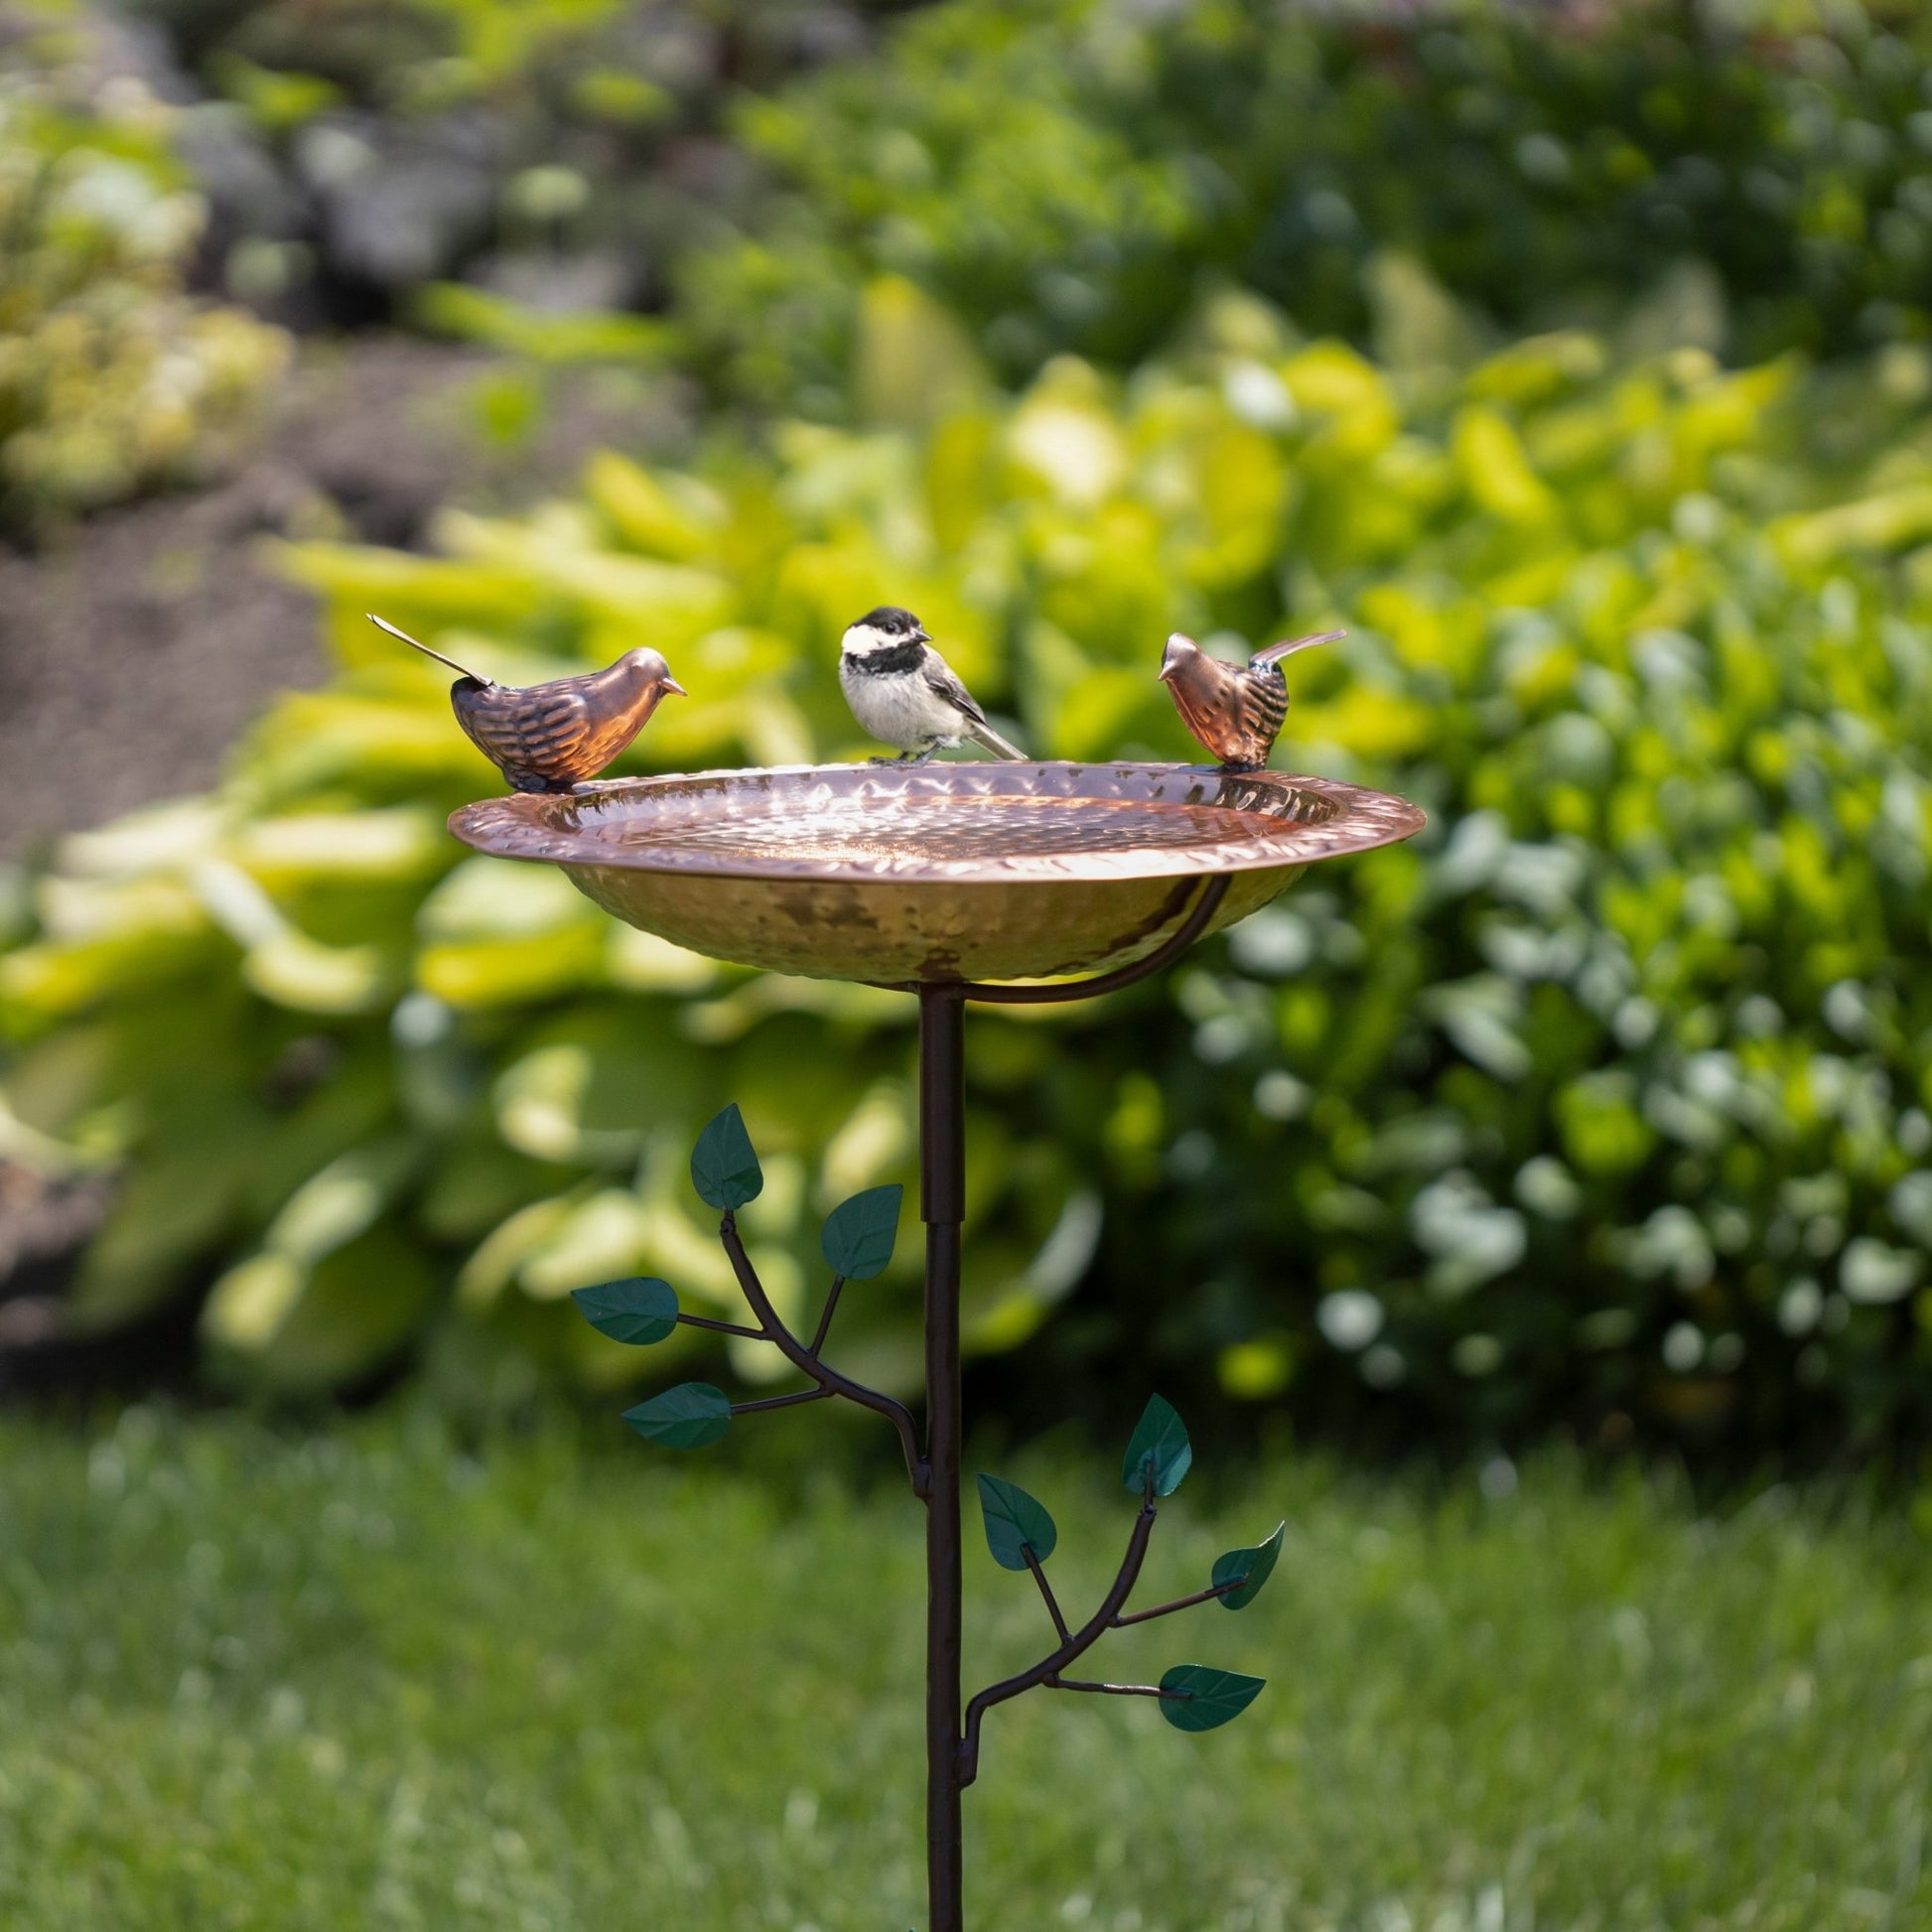 13.5” Birdbath with Copper Birds and Decorative Garden Pole - Good Directions